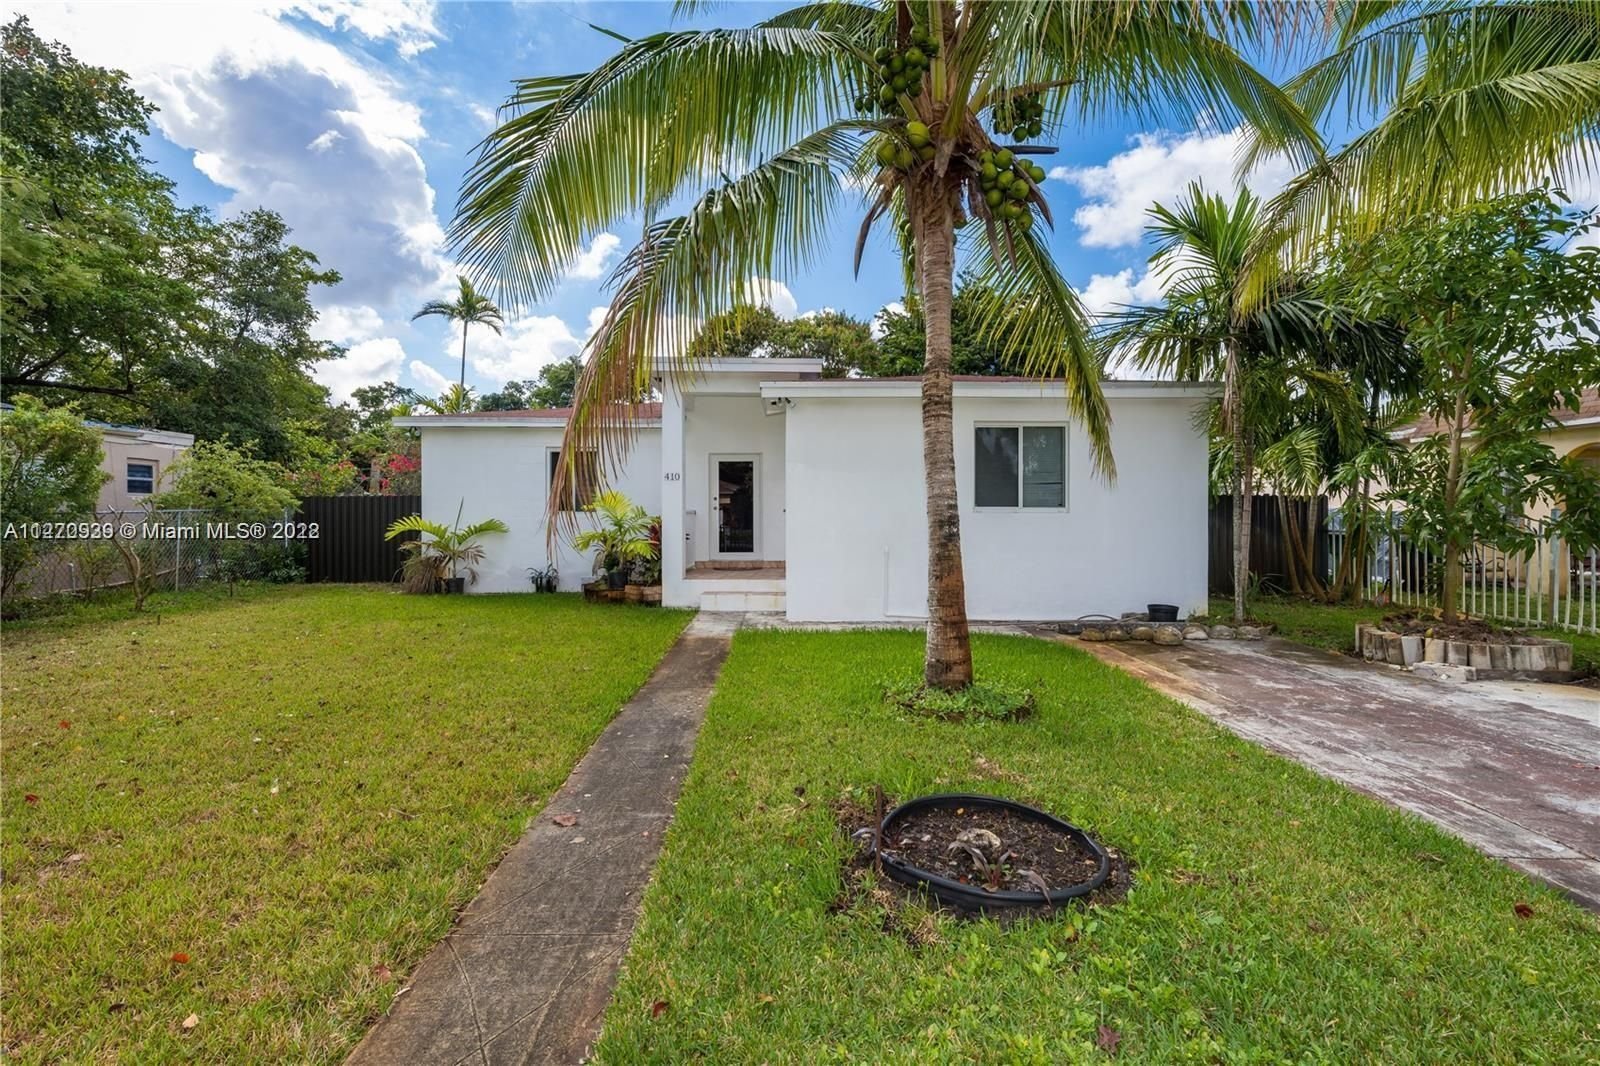 Real estate property located at 410 130th St, Miami-Dade County, North Miami, FL